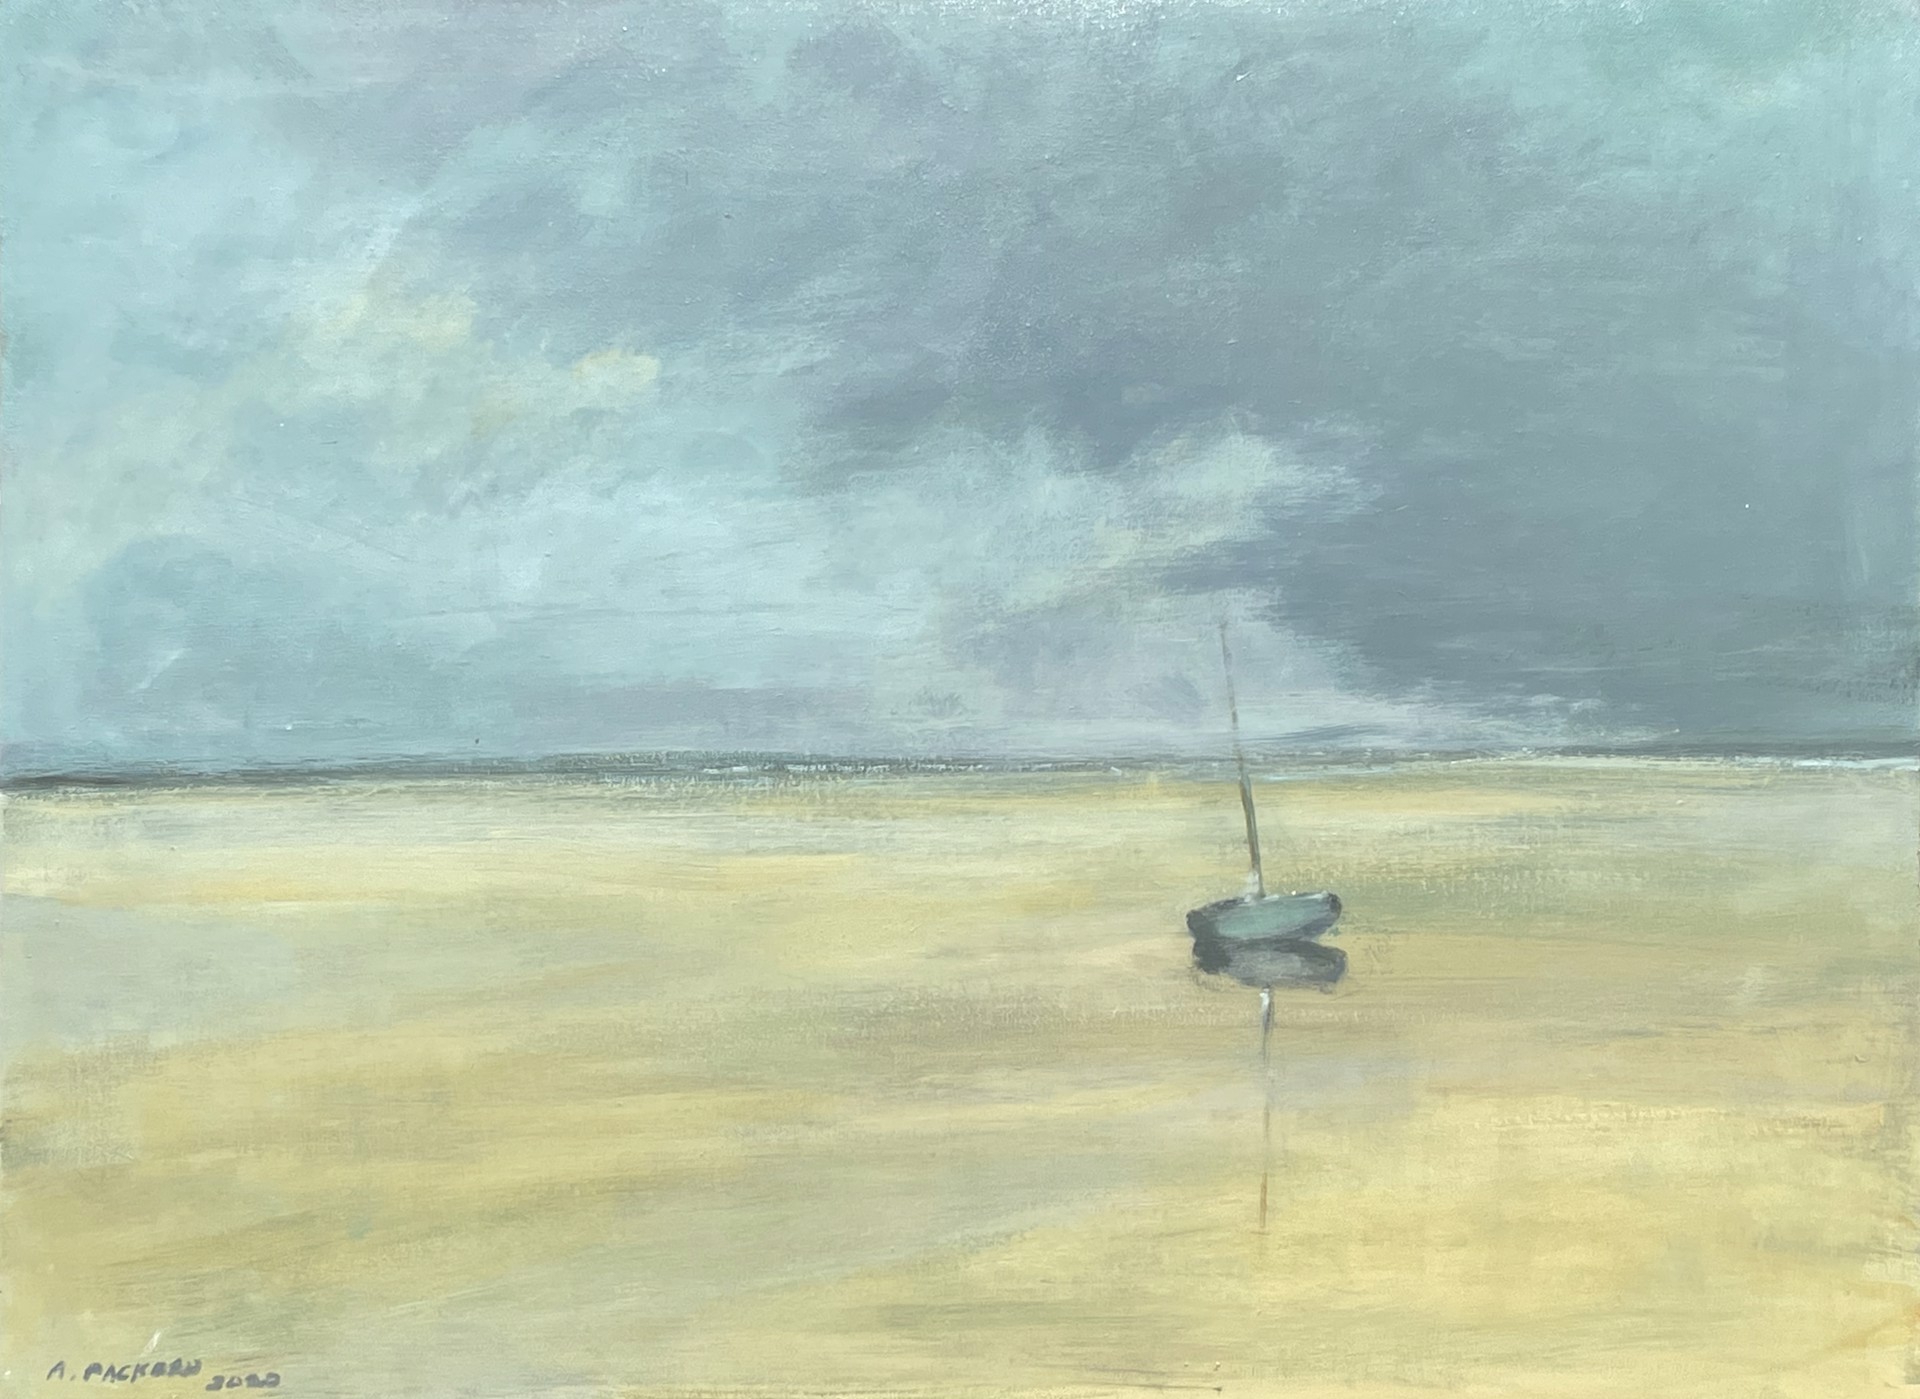 Sail, Sand, Sky by Anne Packard